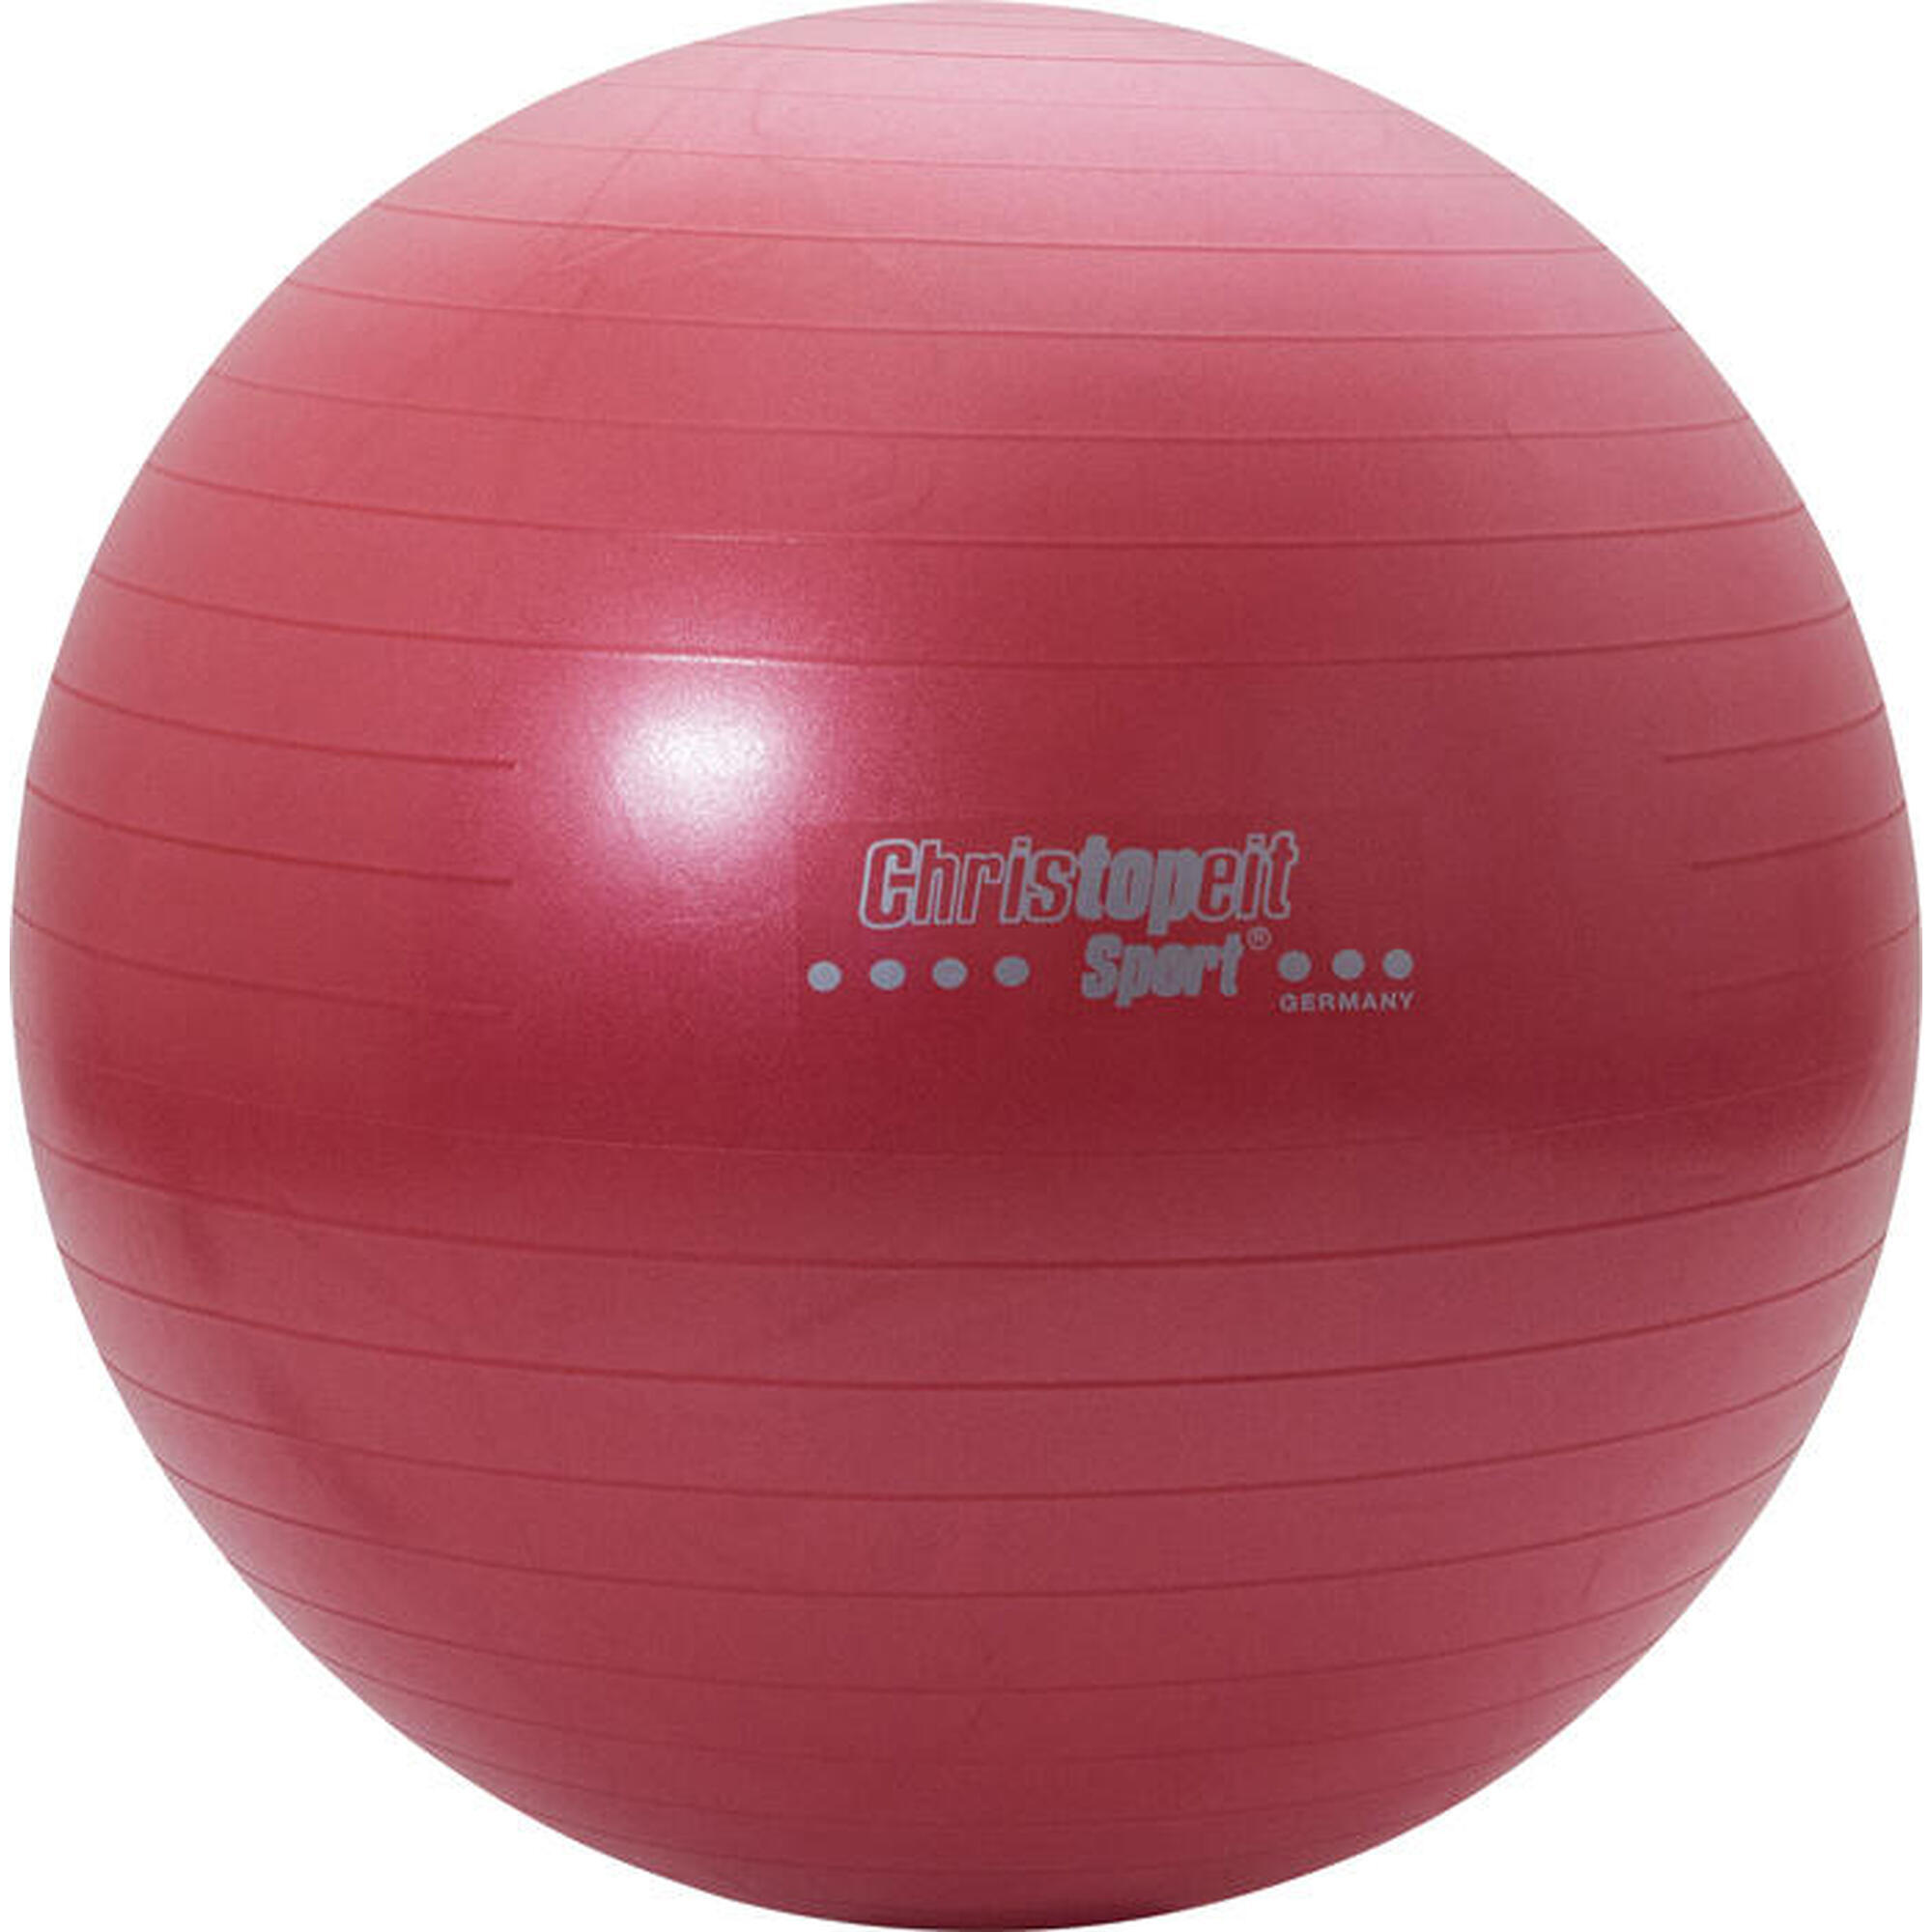 Christopeit Gym balle 65cm incl. pompe rouge